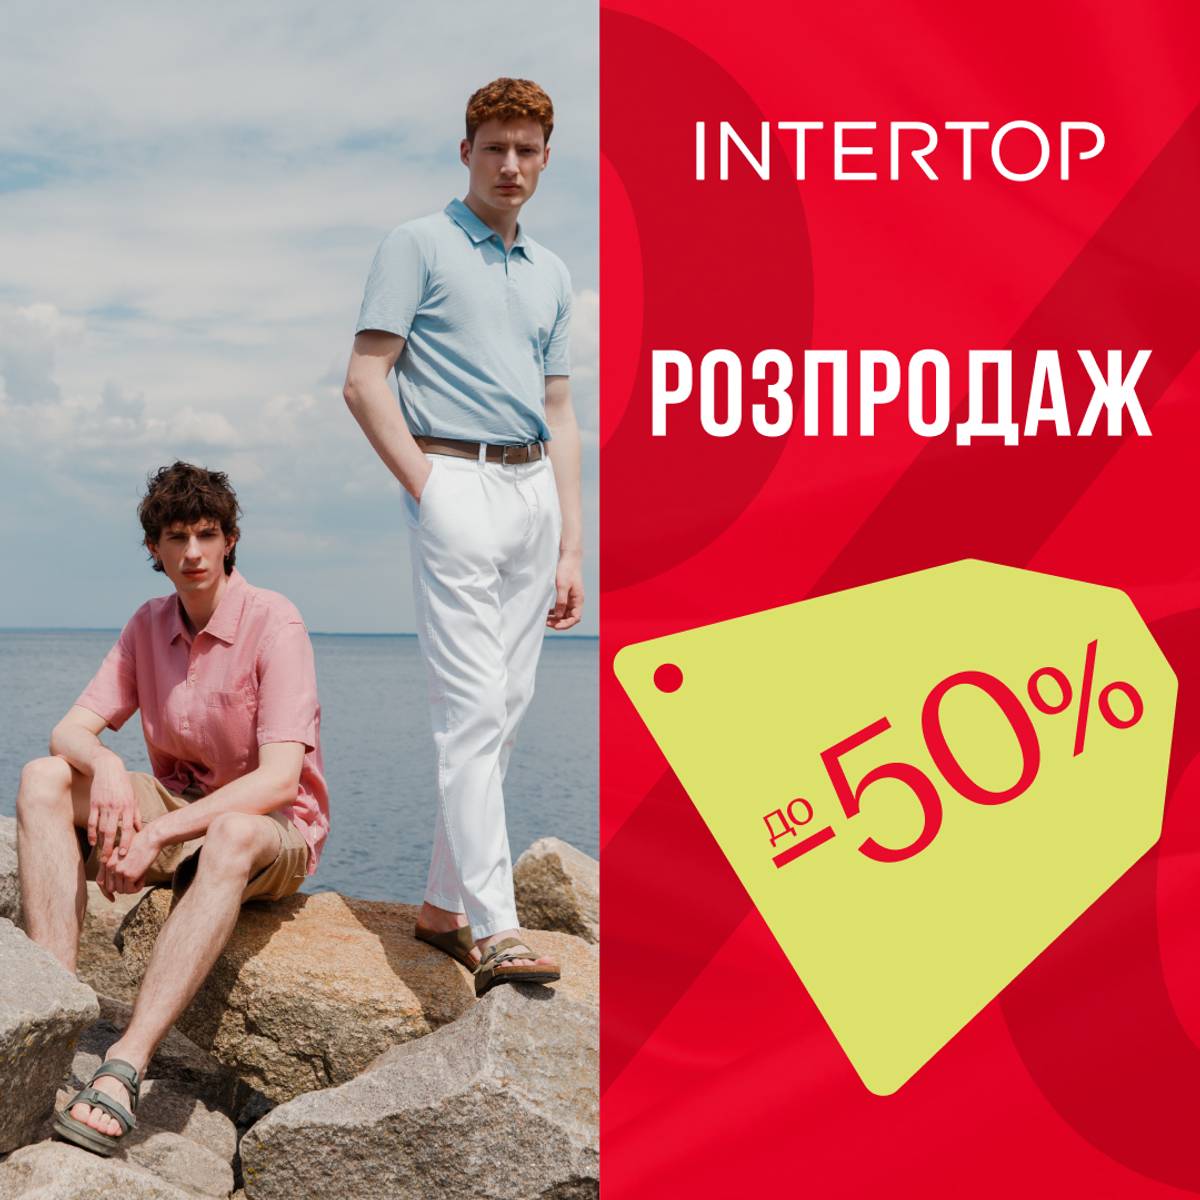 Discounts up to -50% at INTERTOP